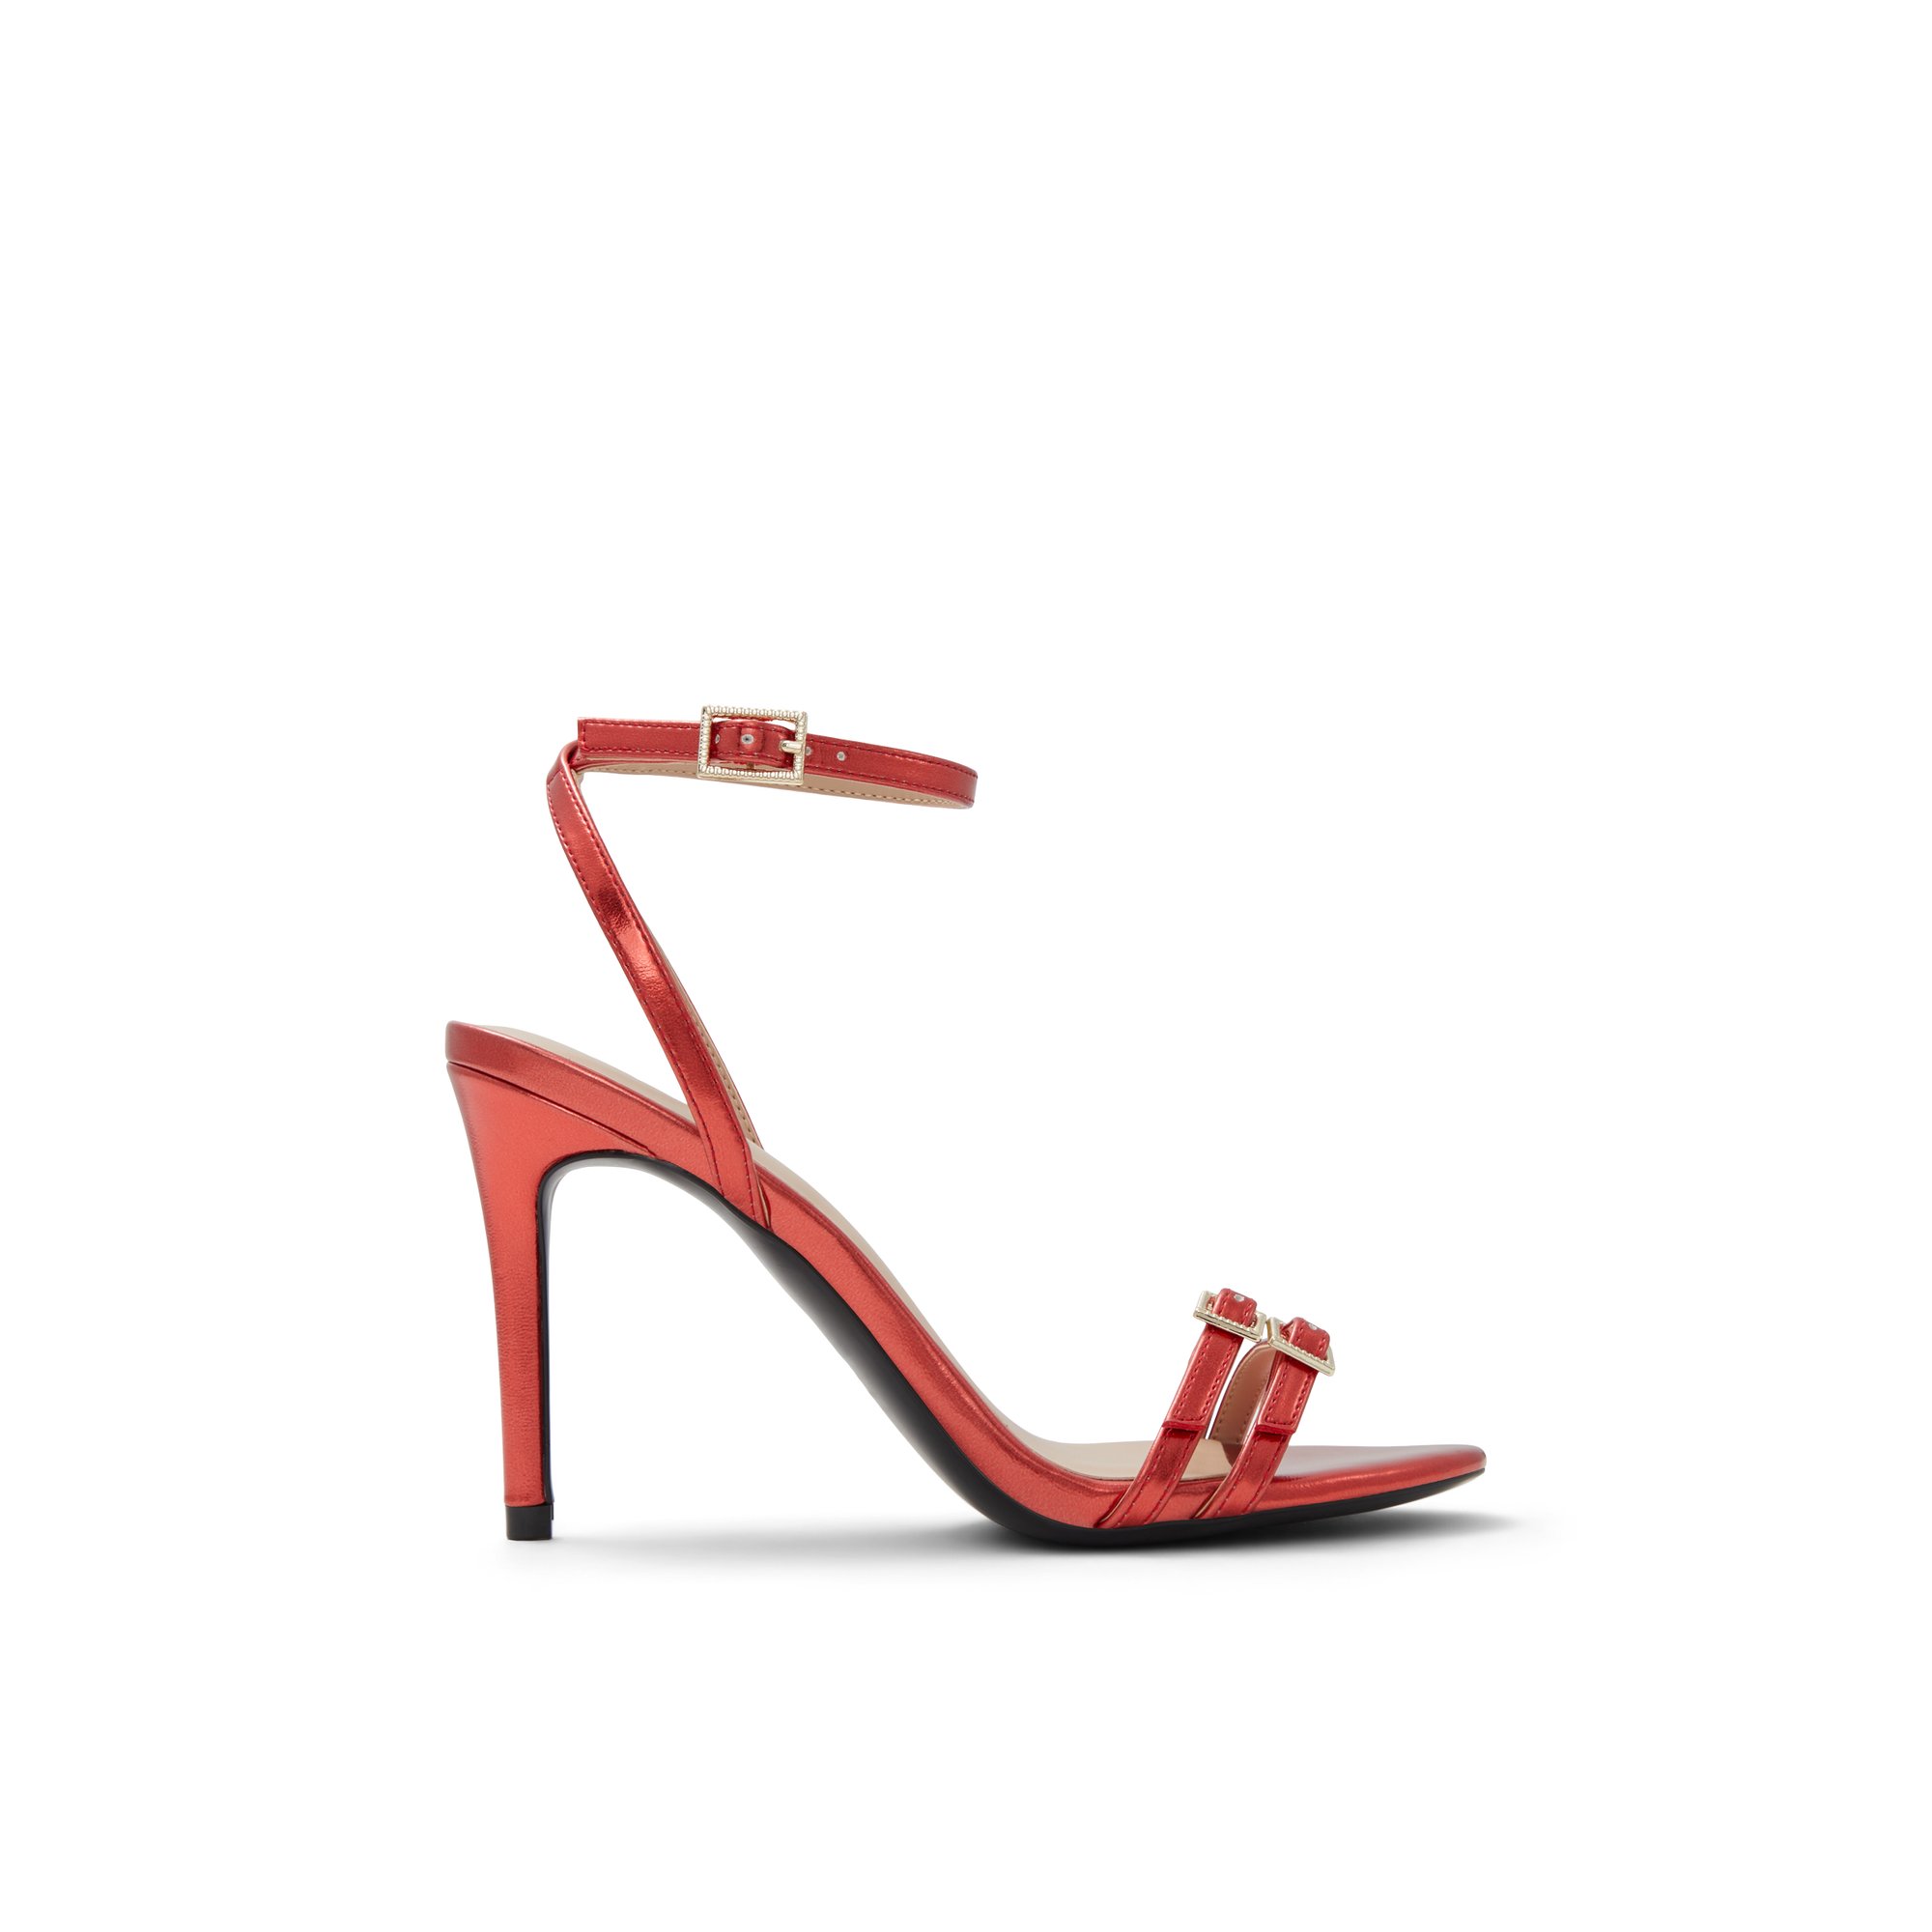 ALDO Graciee - Women's Strappy Sandal Sandals - Red